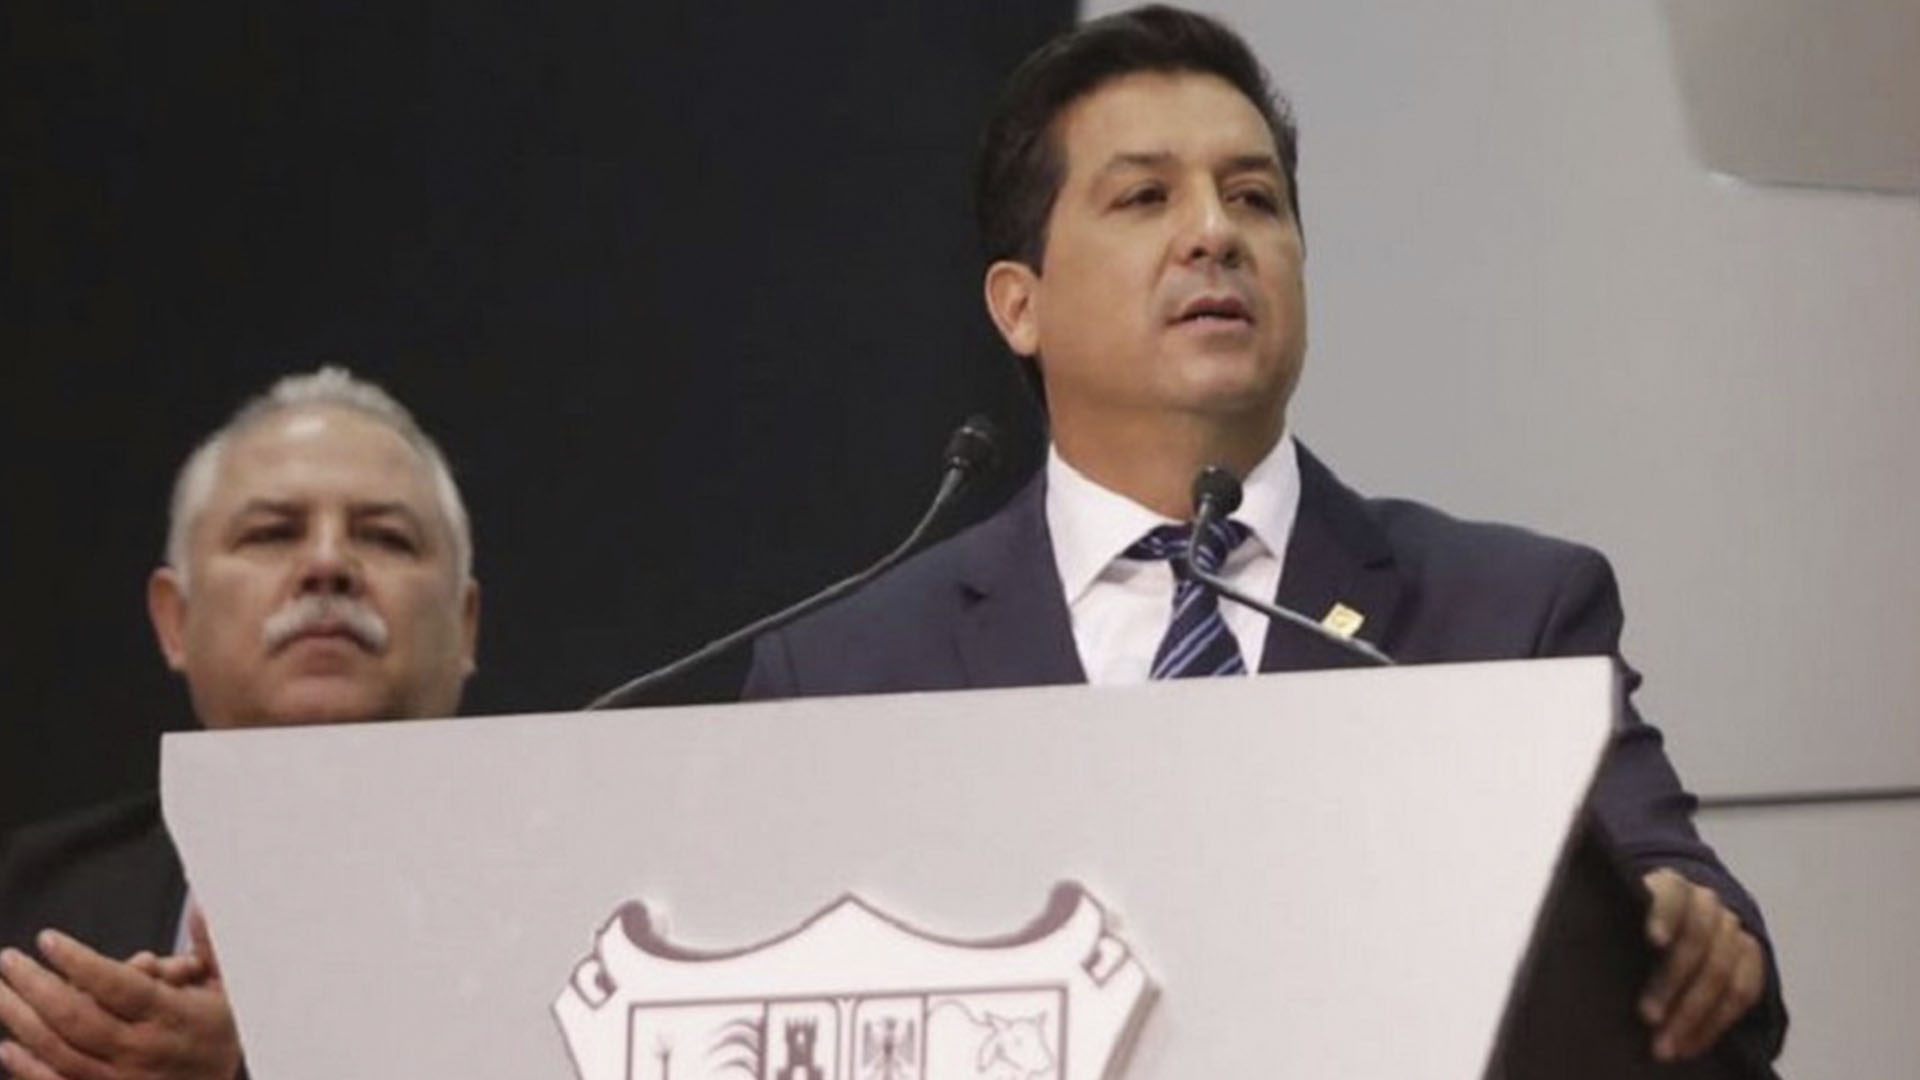 Francisco Javier García Cabeza de Vaca, the governor of Tamaulipas who fights "Your right" to play golf